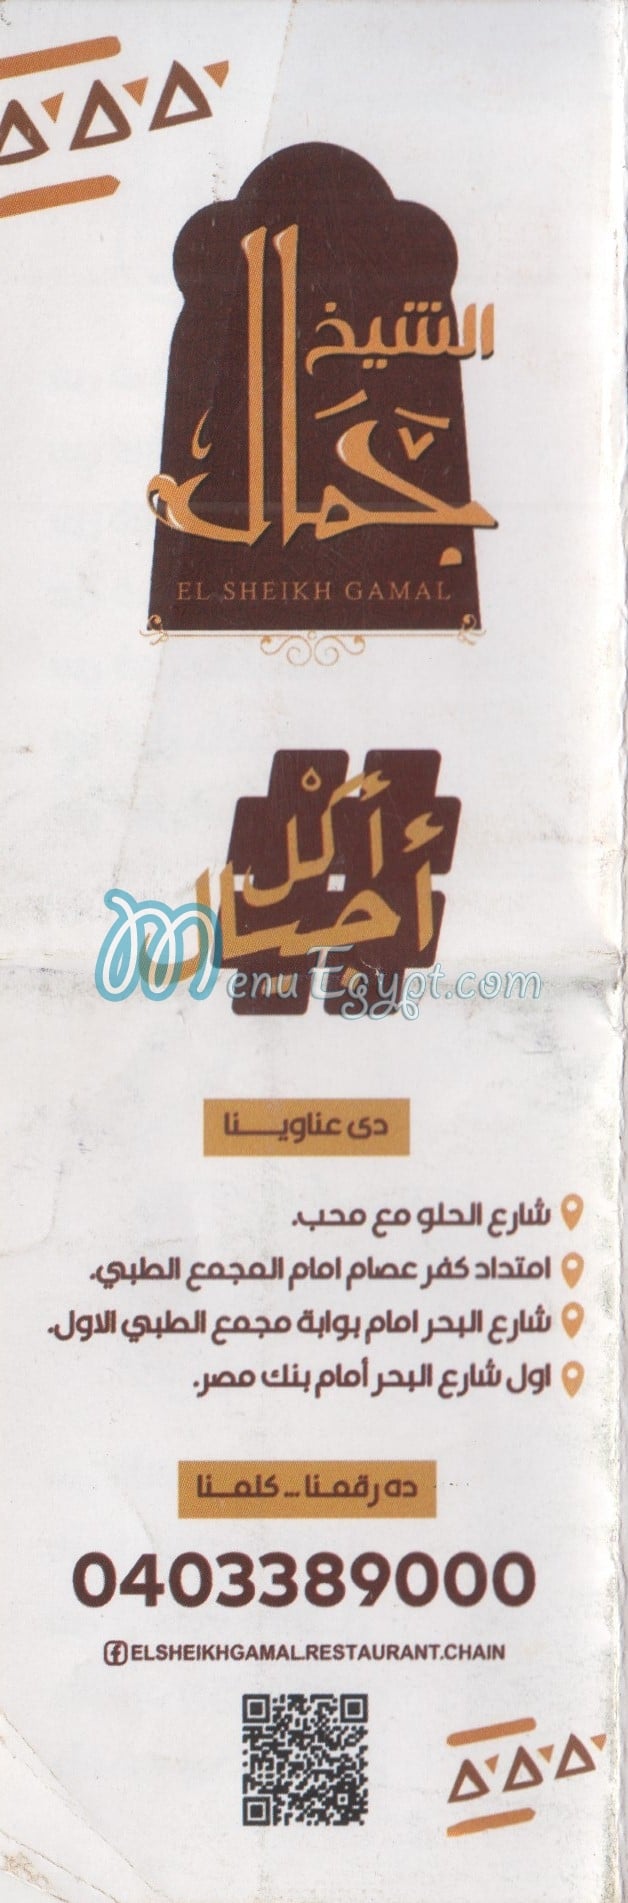 El Shekh Gamal menu